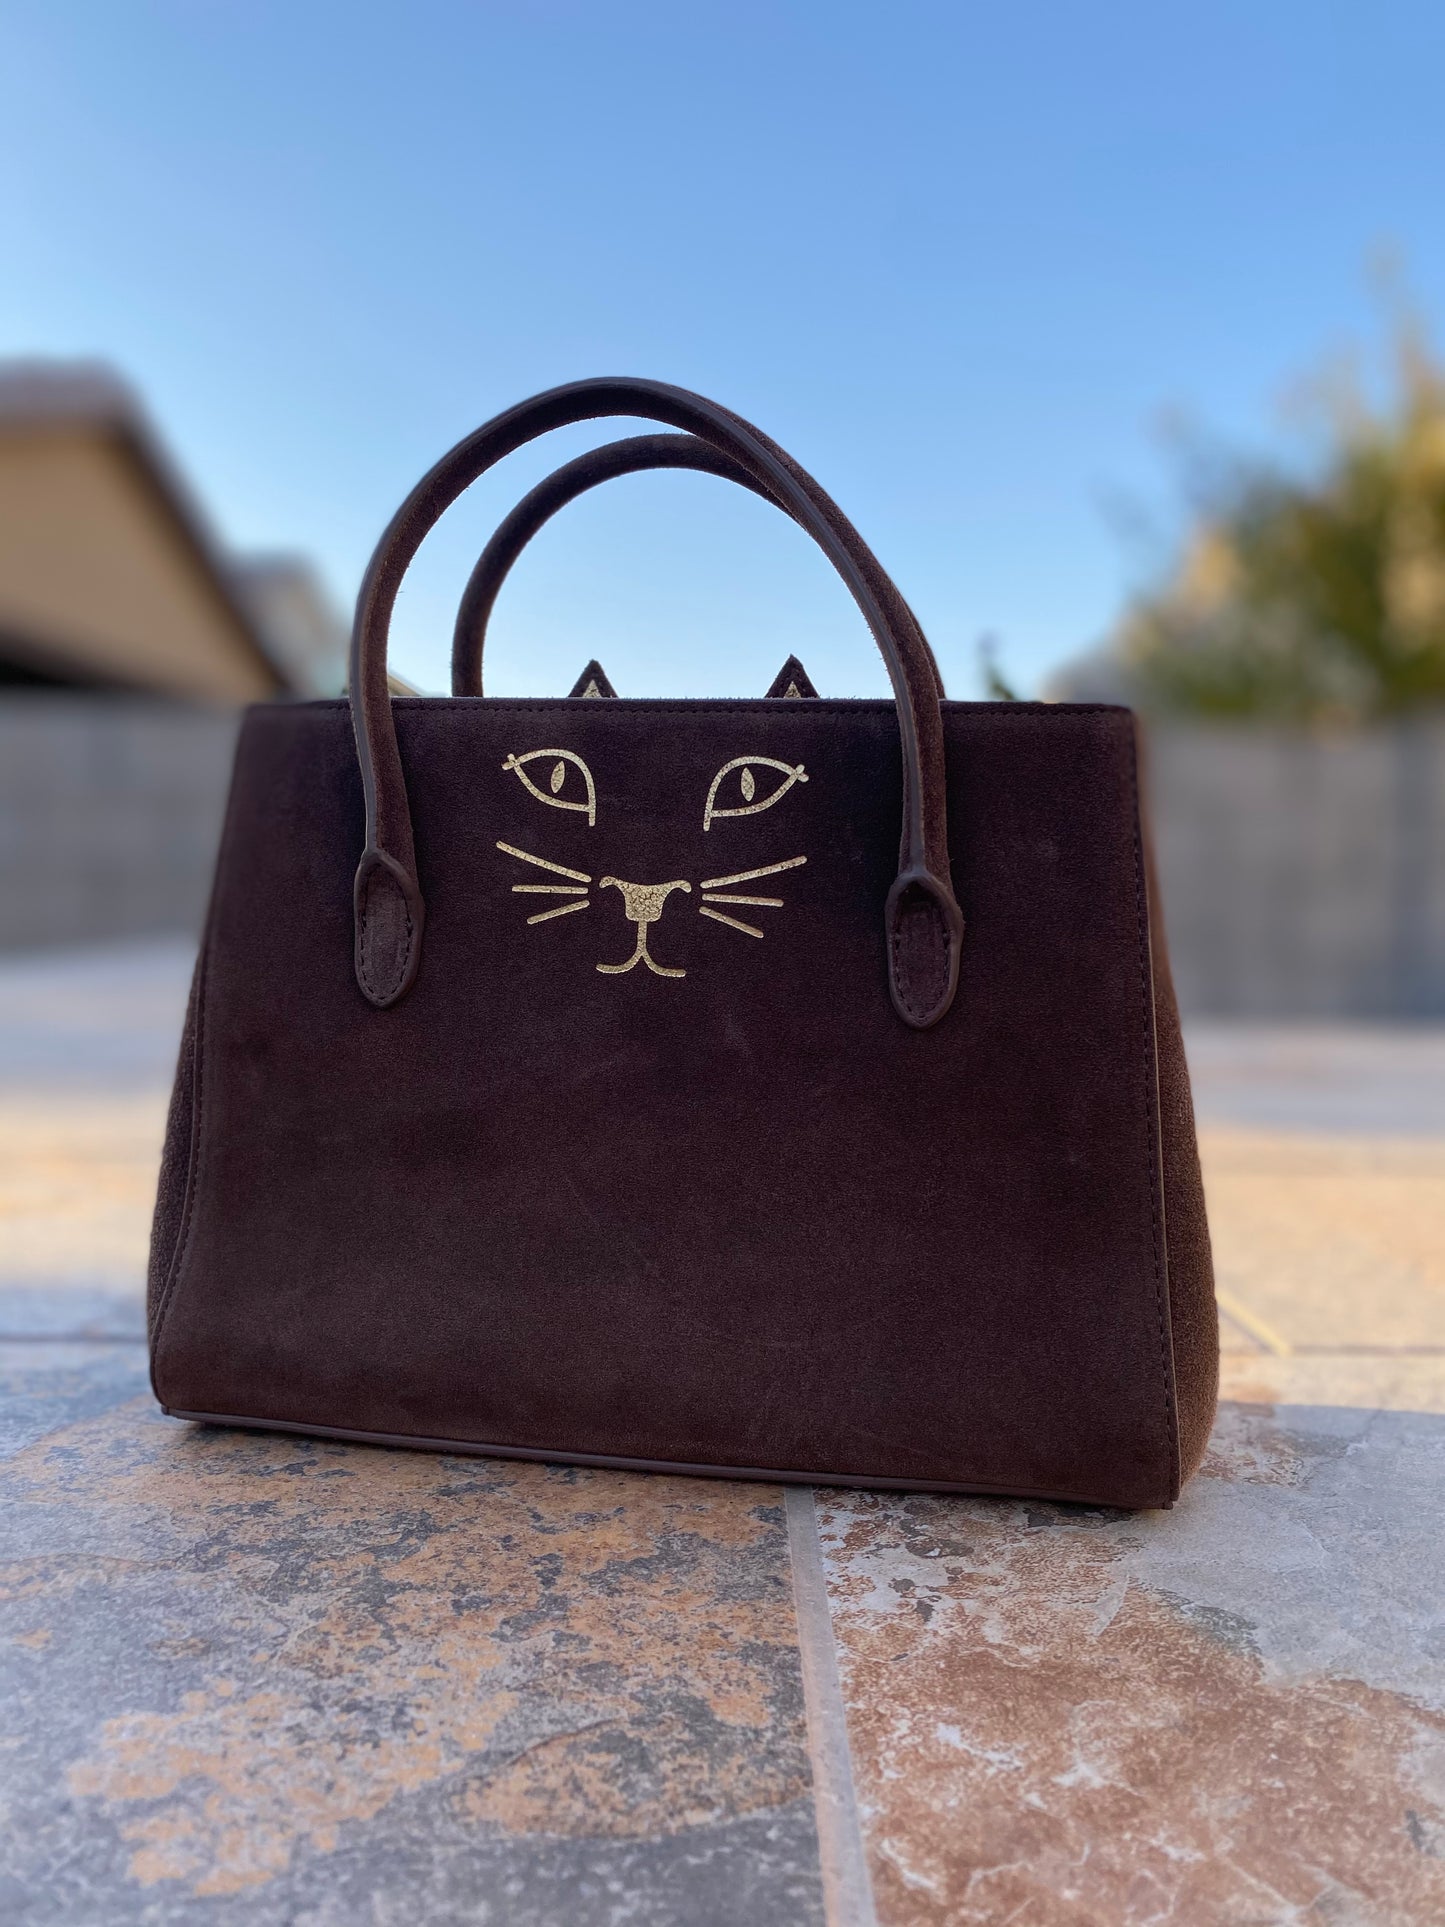 Charlotte Olympia Feline Petit Poitier Handbag